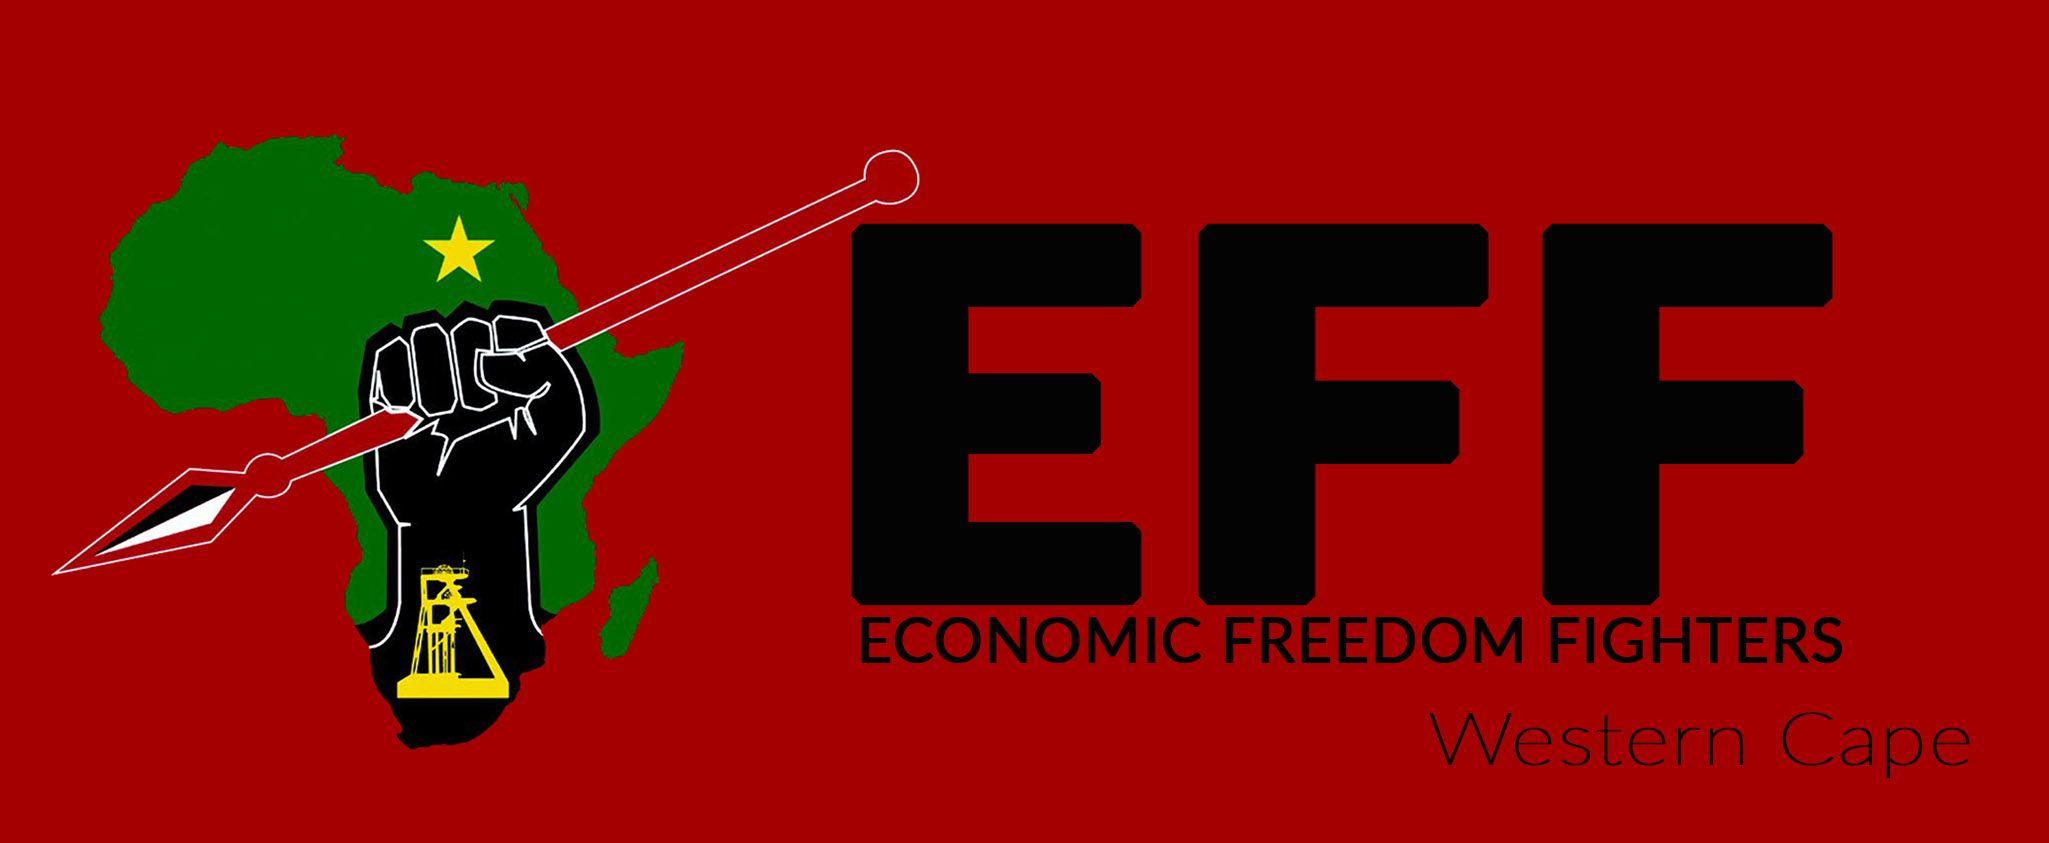 Eff Logo - EFF LOGO PAGE3. Economic Freedom Fighters